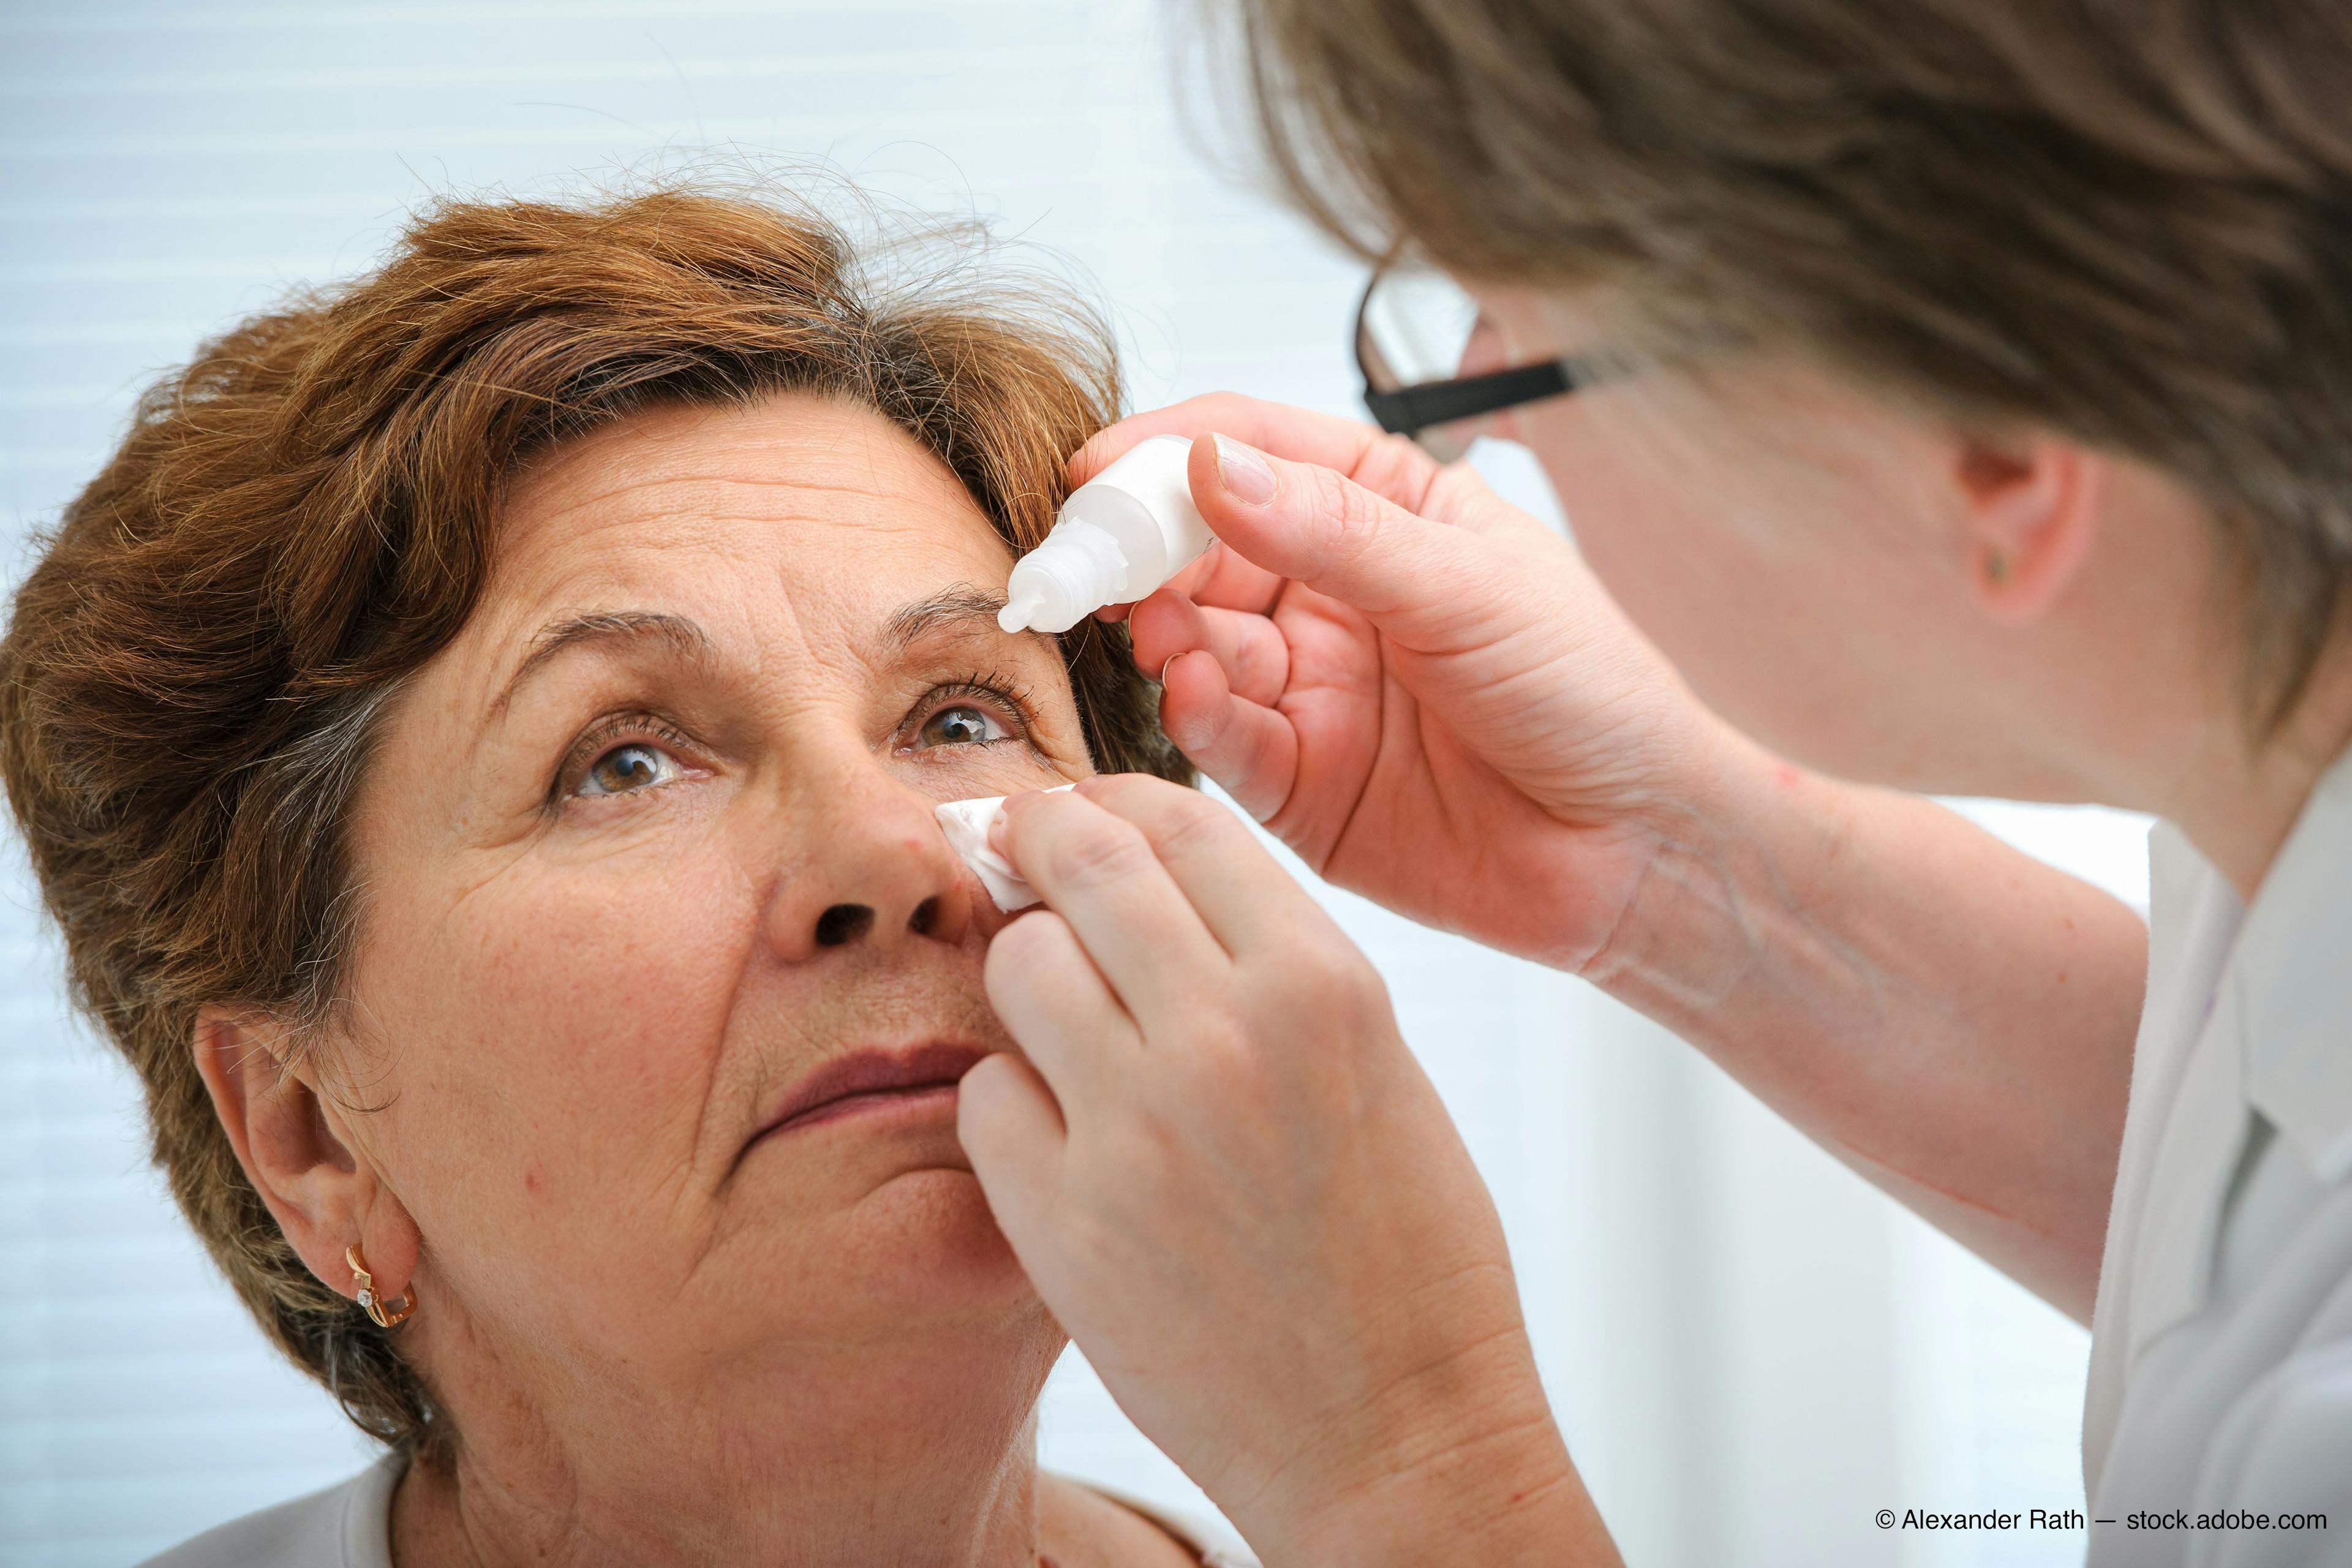 FDA approves eye drops for treatment of presbyopia